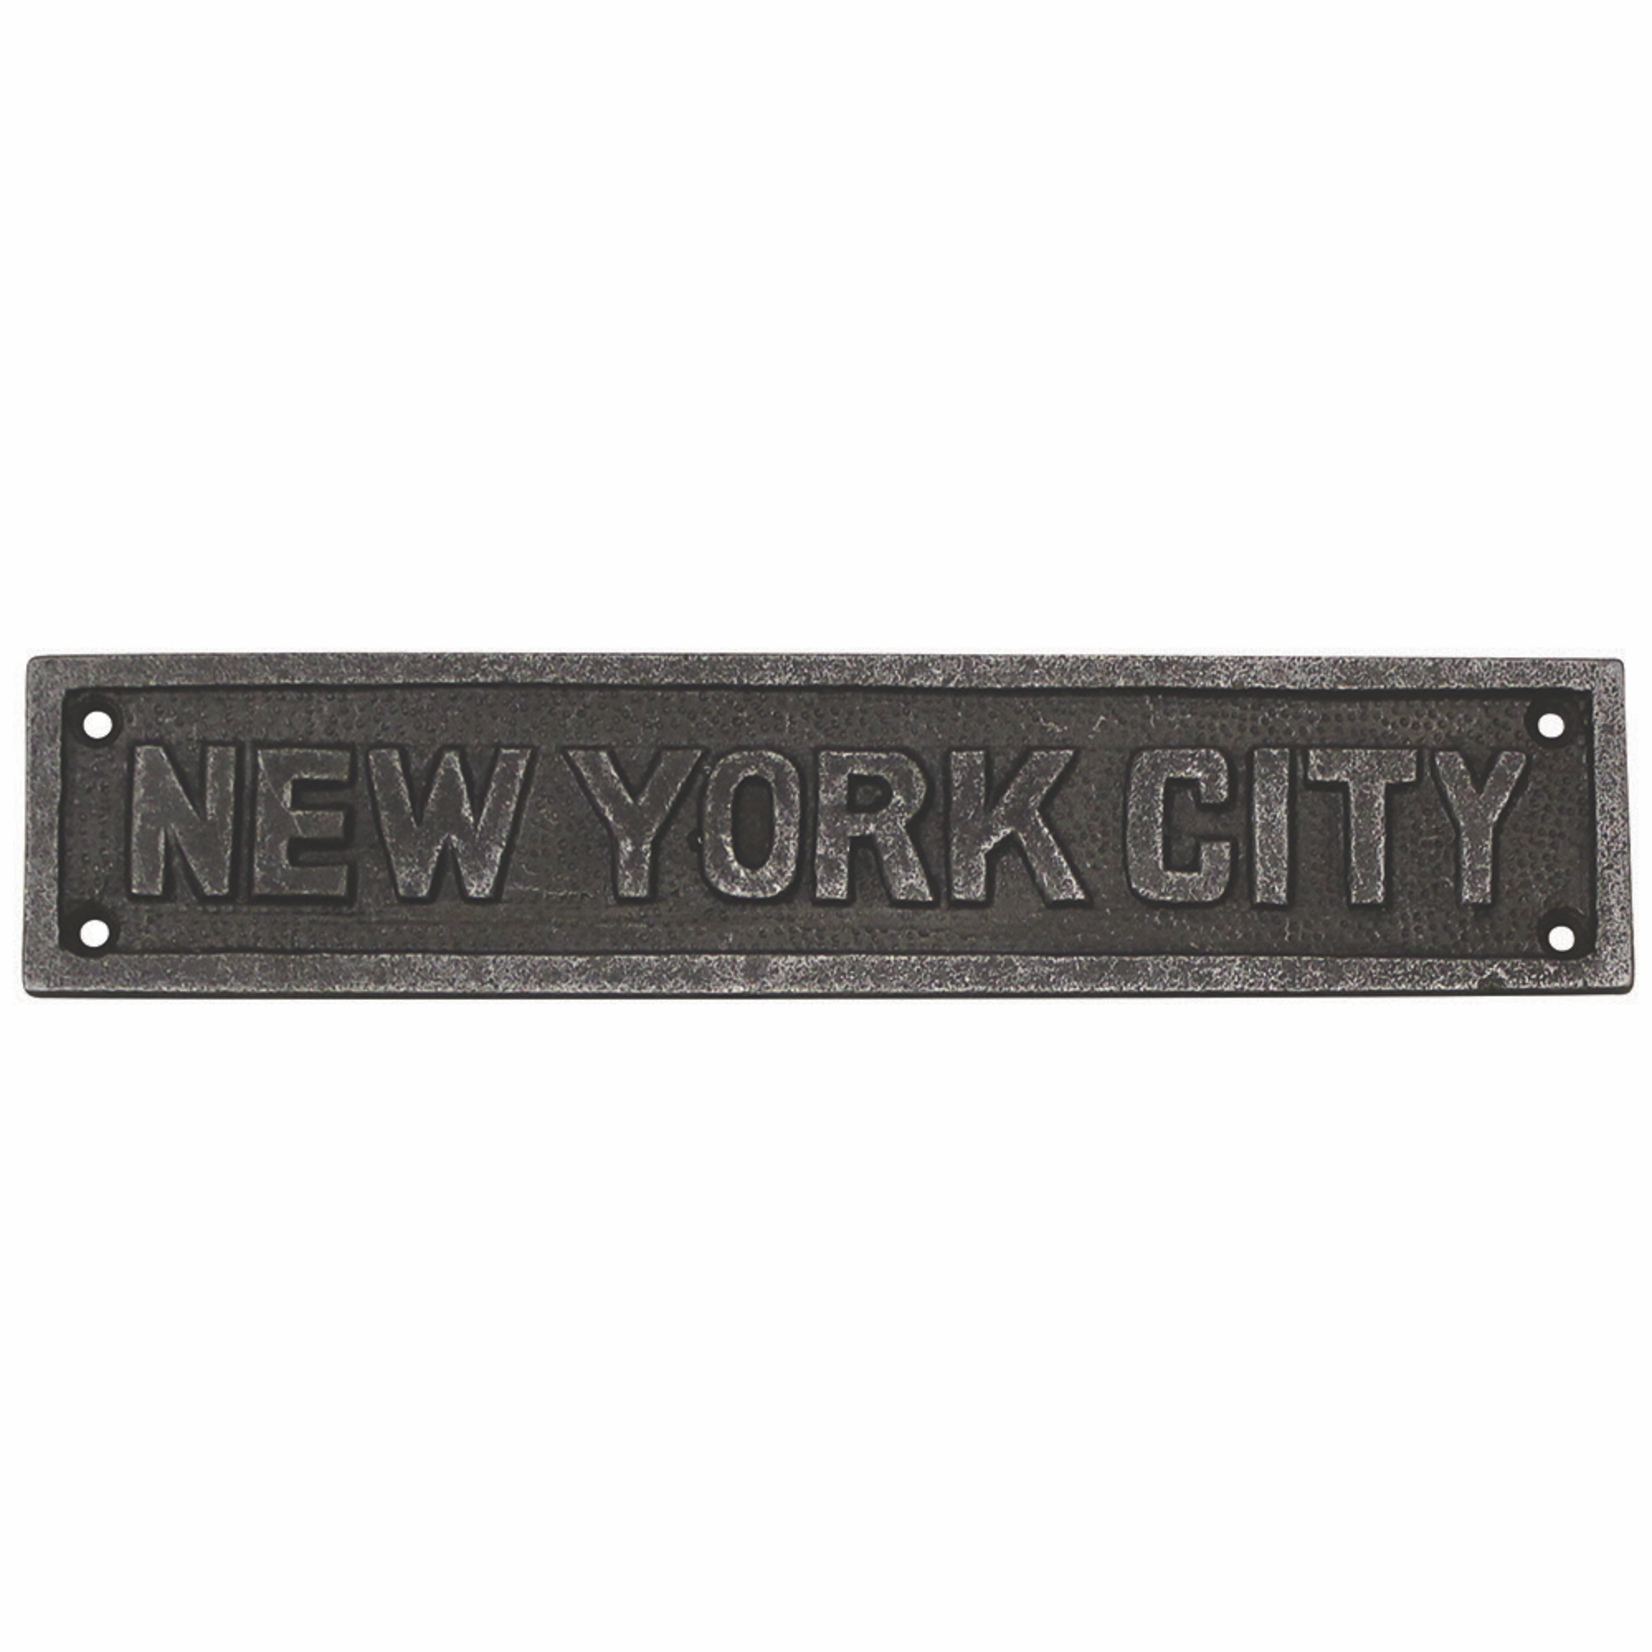 IRON RANGE Plaque NEW YORK CITY Antique Cast Iron 230mm x 50mm